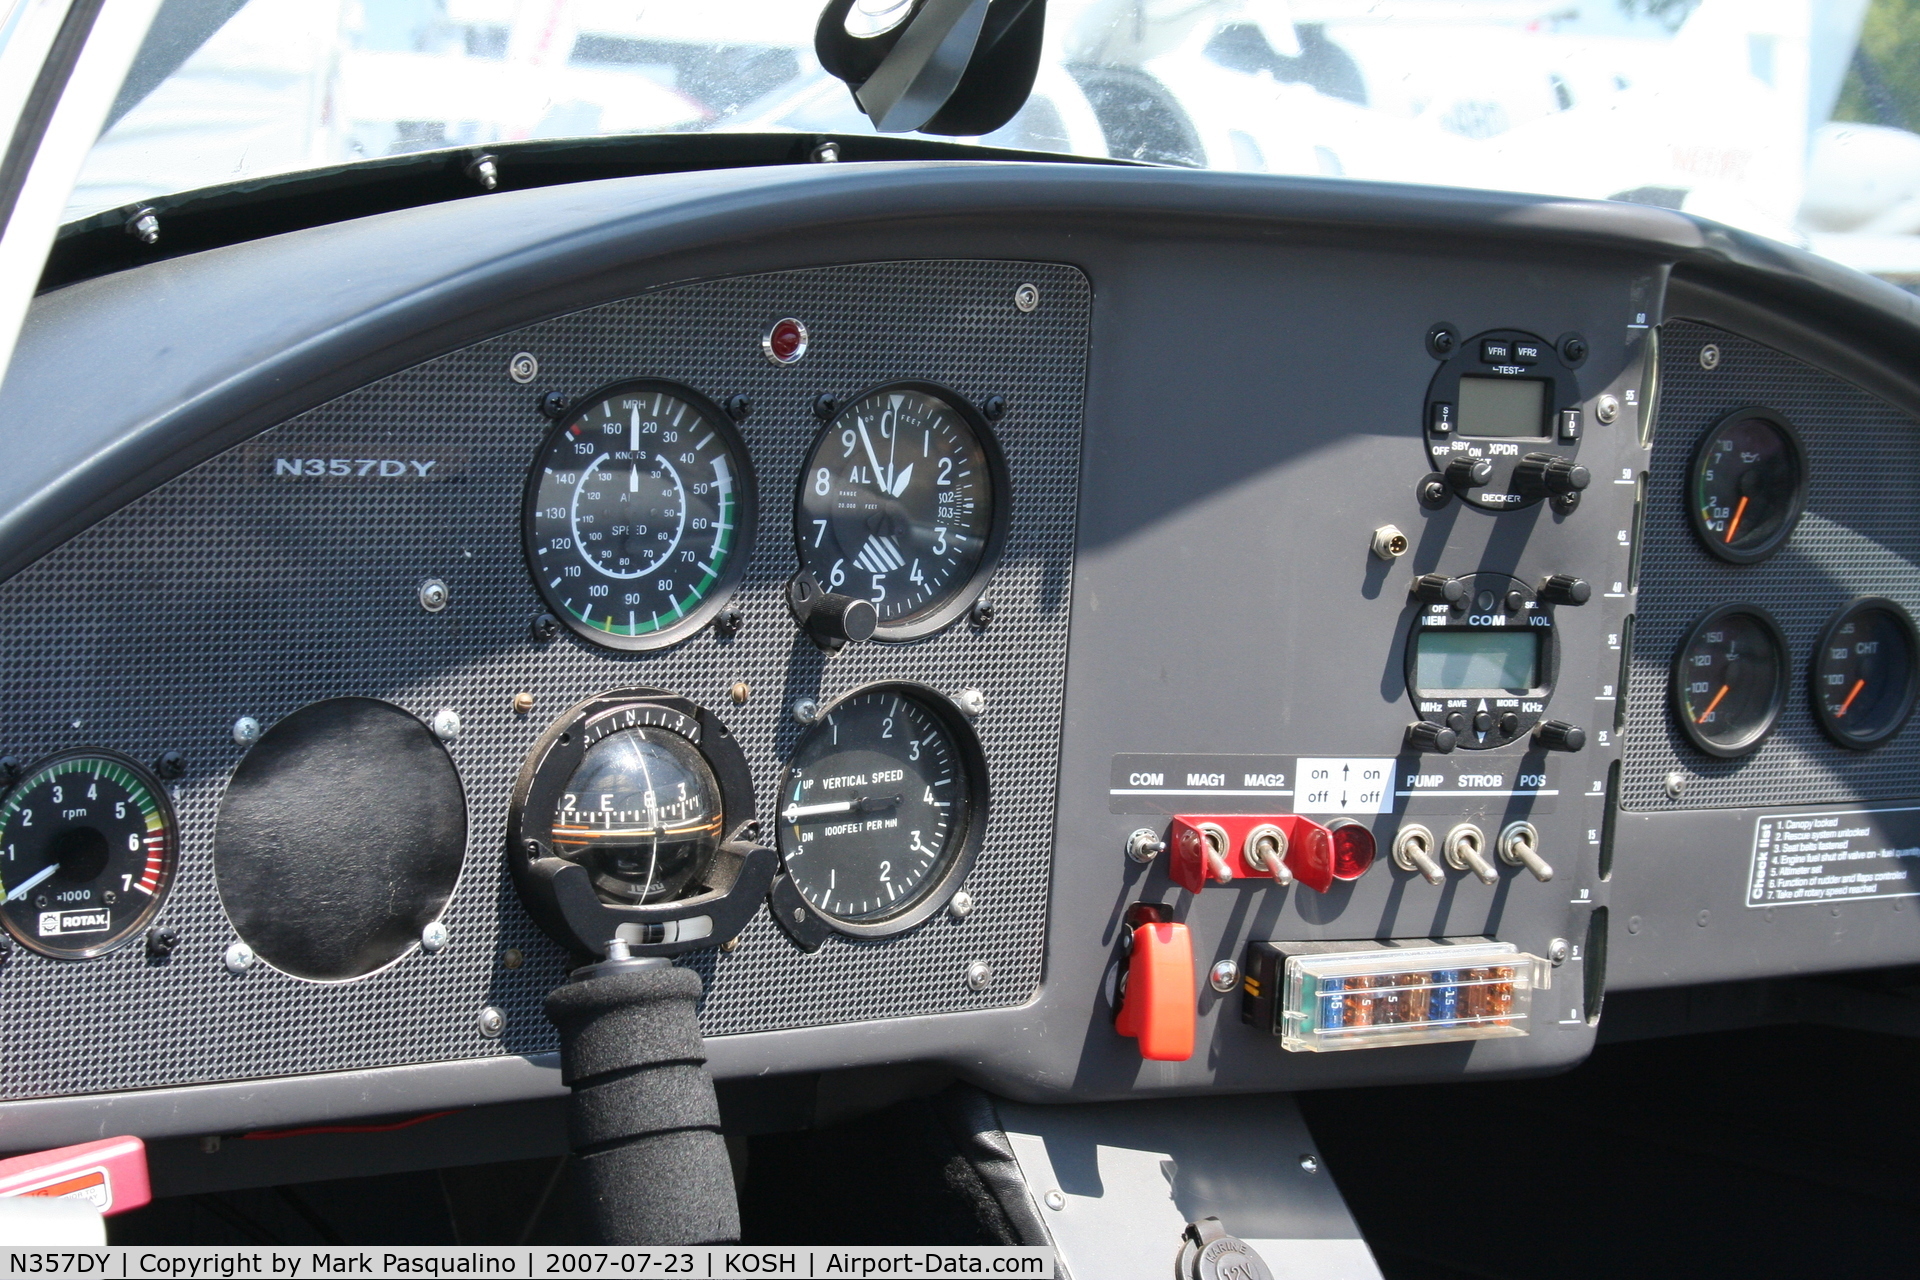 N357DY, 2005 Aerostyle Breezer C/N 046, Ikarus Breezer